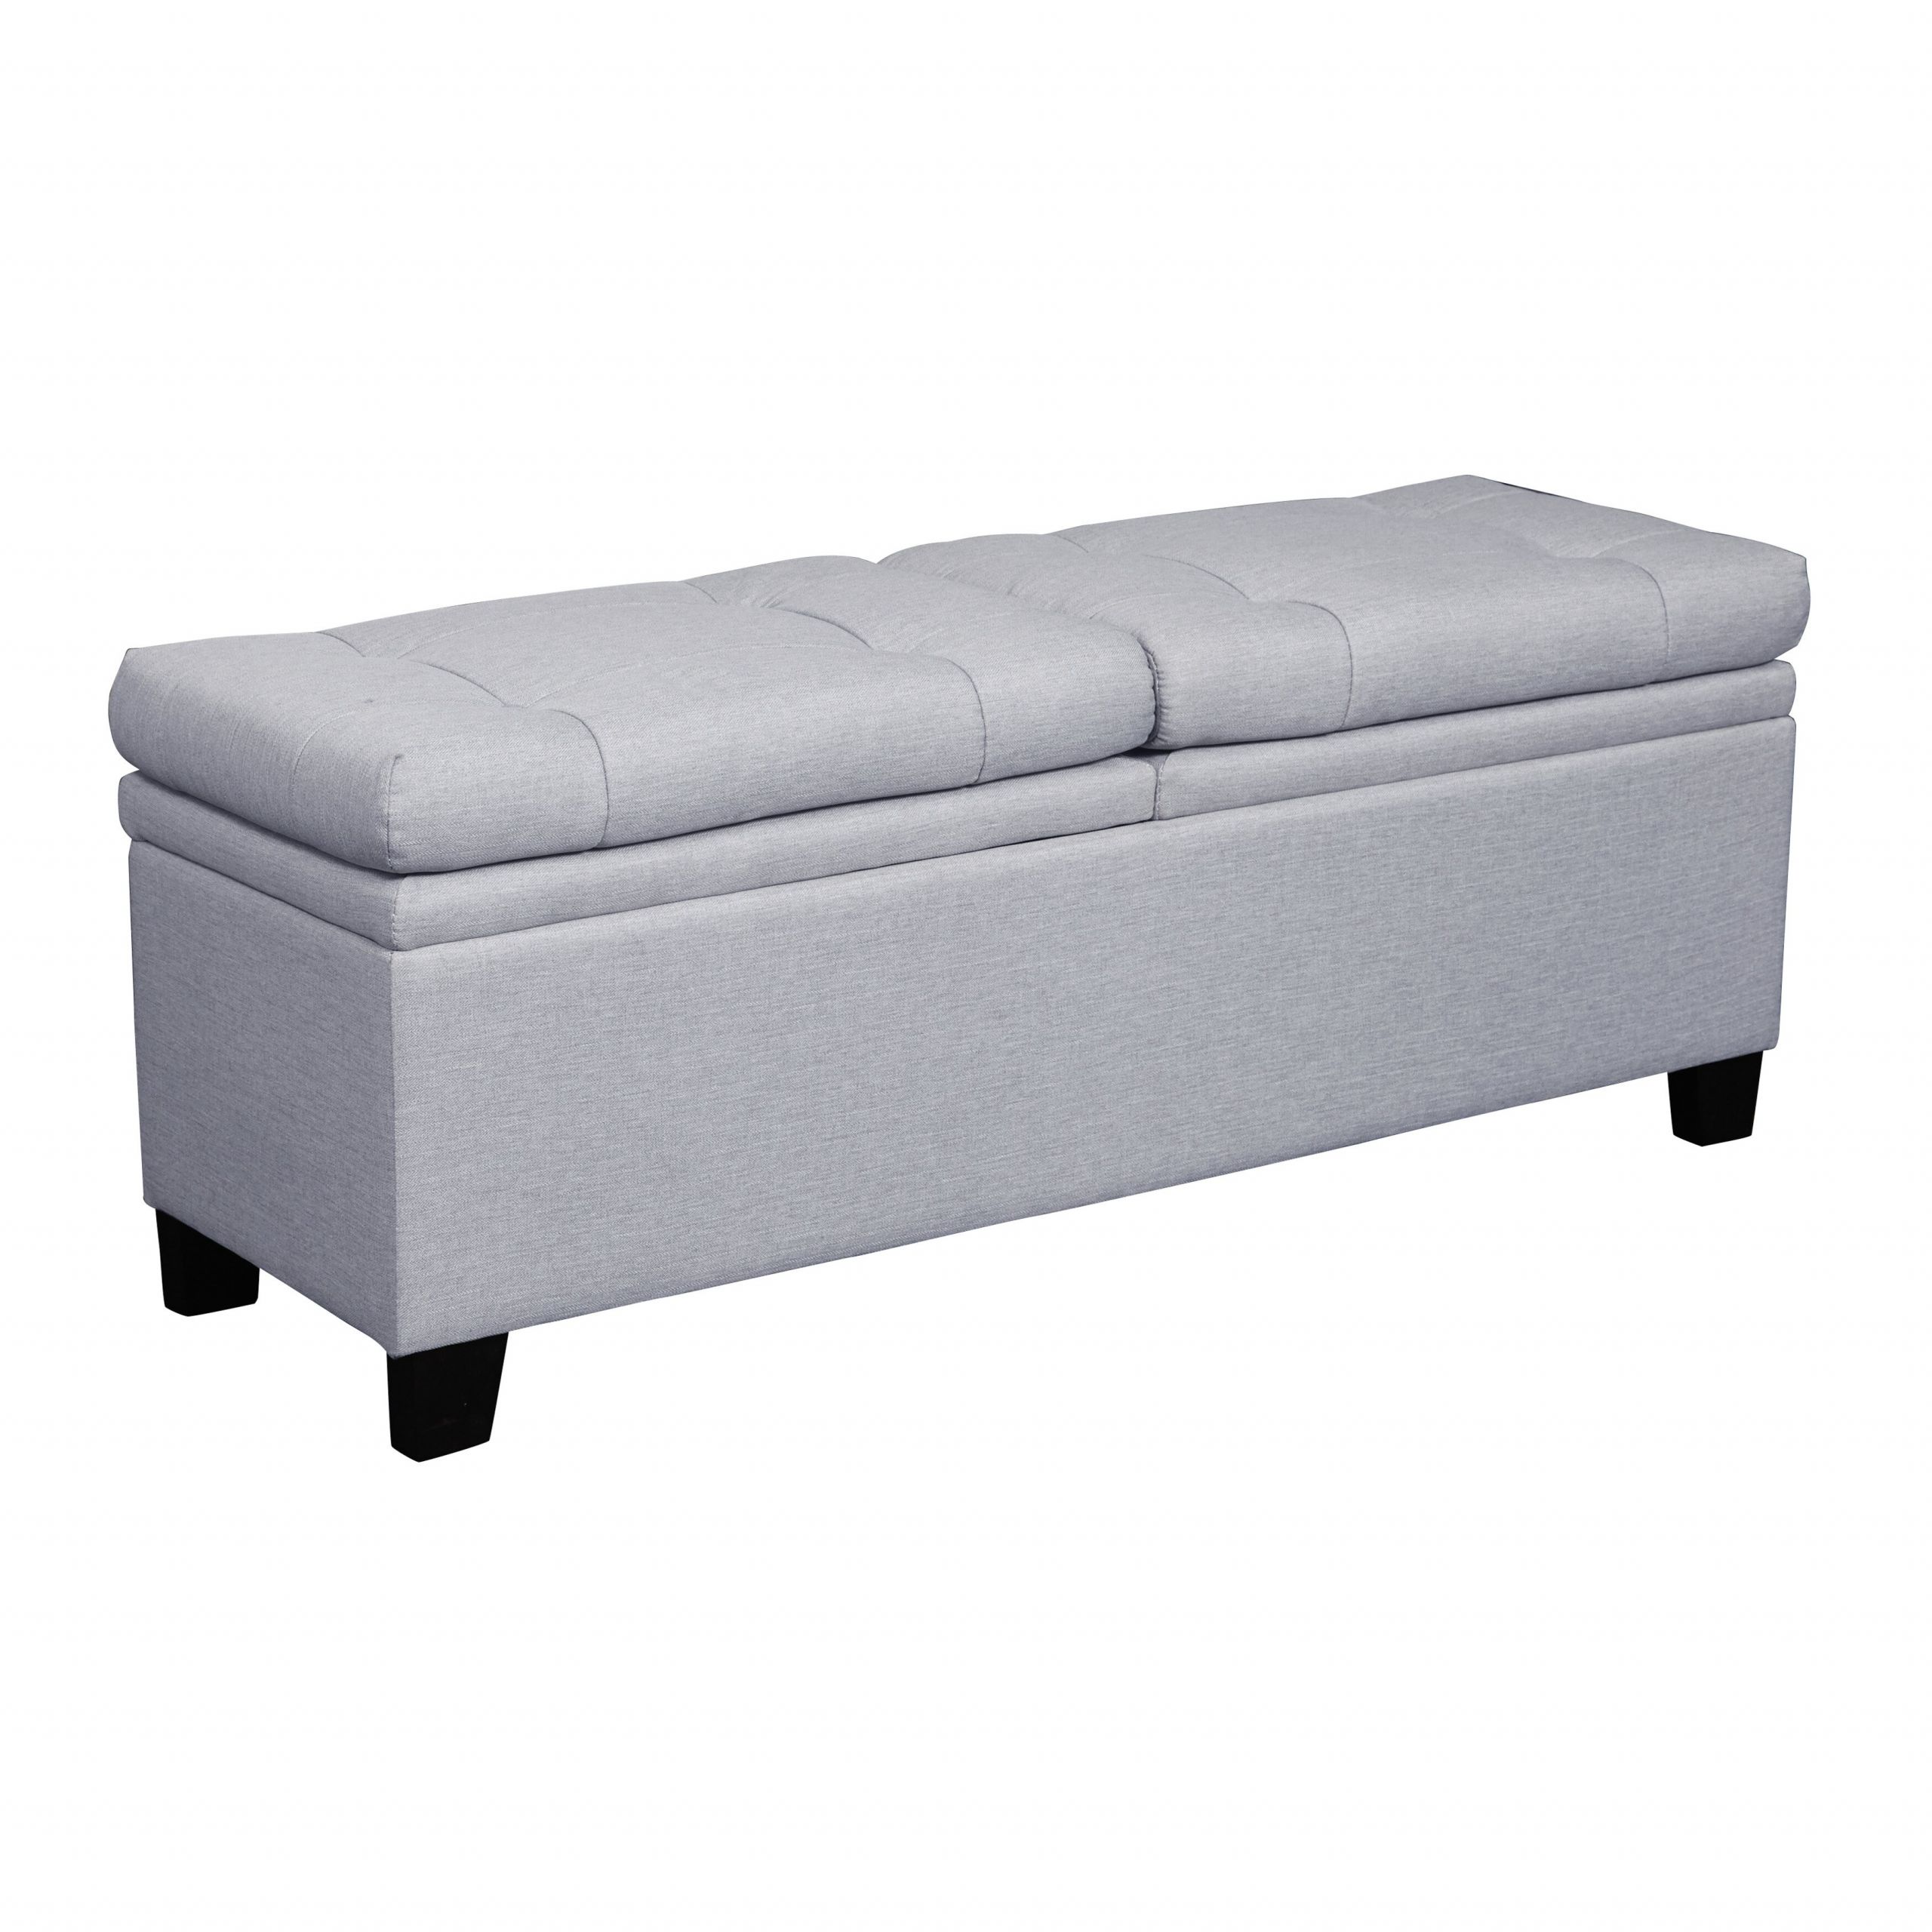 Large Storage Bench For Bedroom
 PRI Lilac Fields Upholstered Bedroom Storage Bench